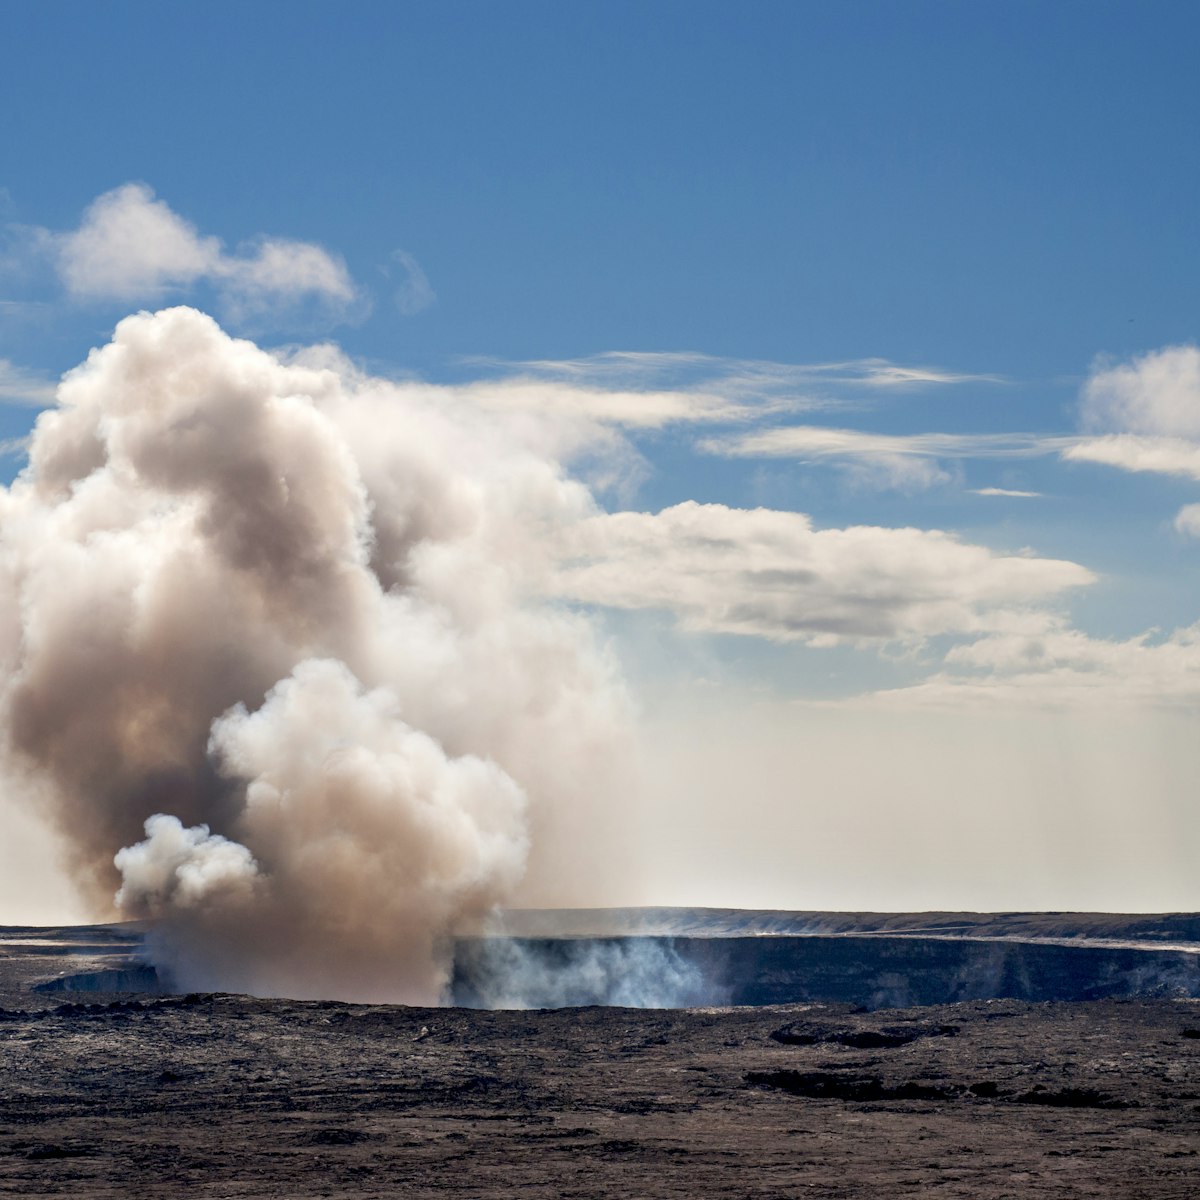 Smoke plumes from the Kilauea Volcano on the Big Island of Hawaii.